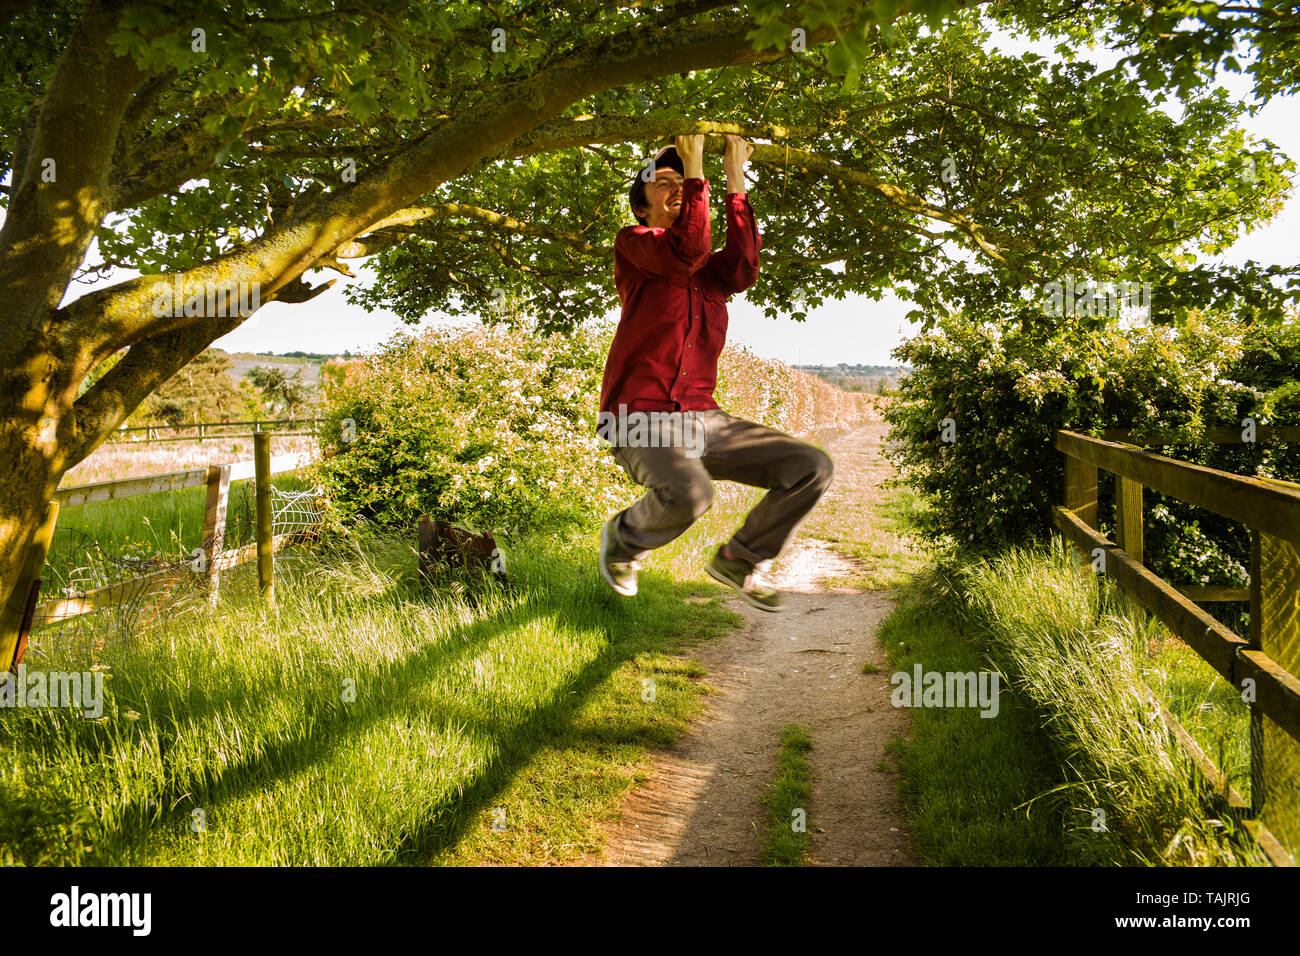 Jakob klettert einen Baum Thaxted Essex England UK Mai 2019 junger Mann klettert einen Baum. Model Released - Fotografen Sohn Stockfoto